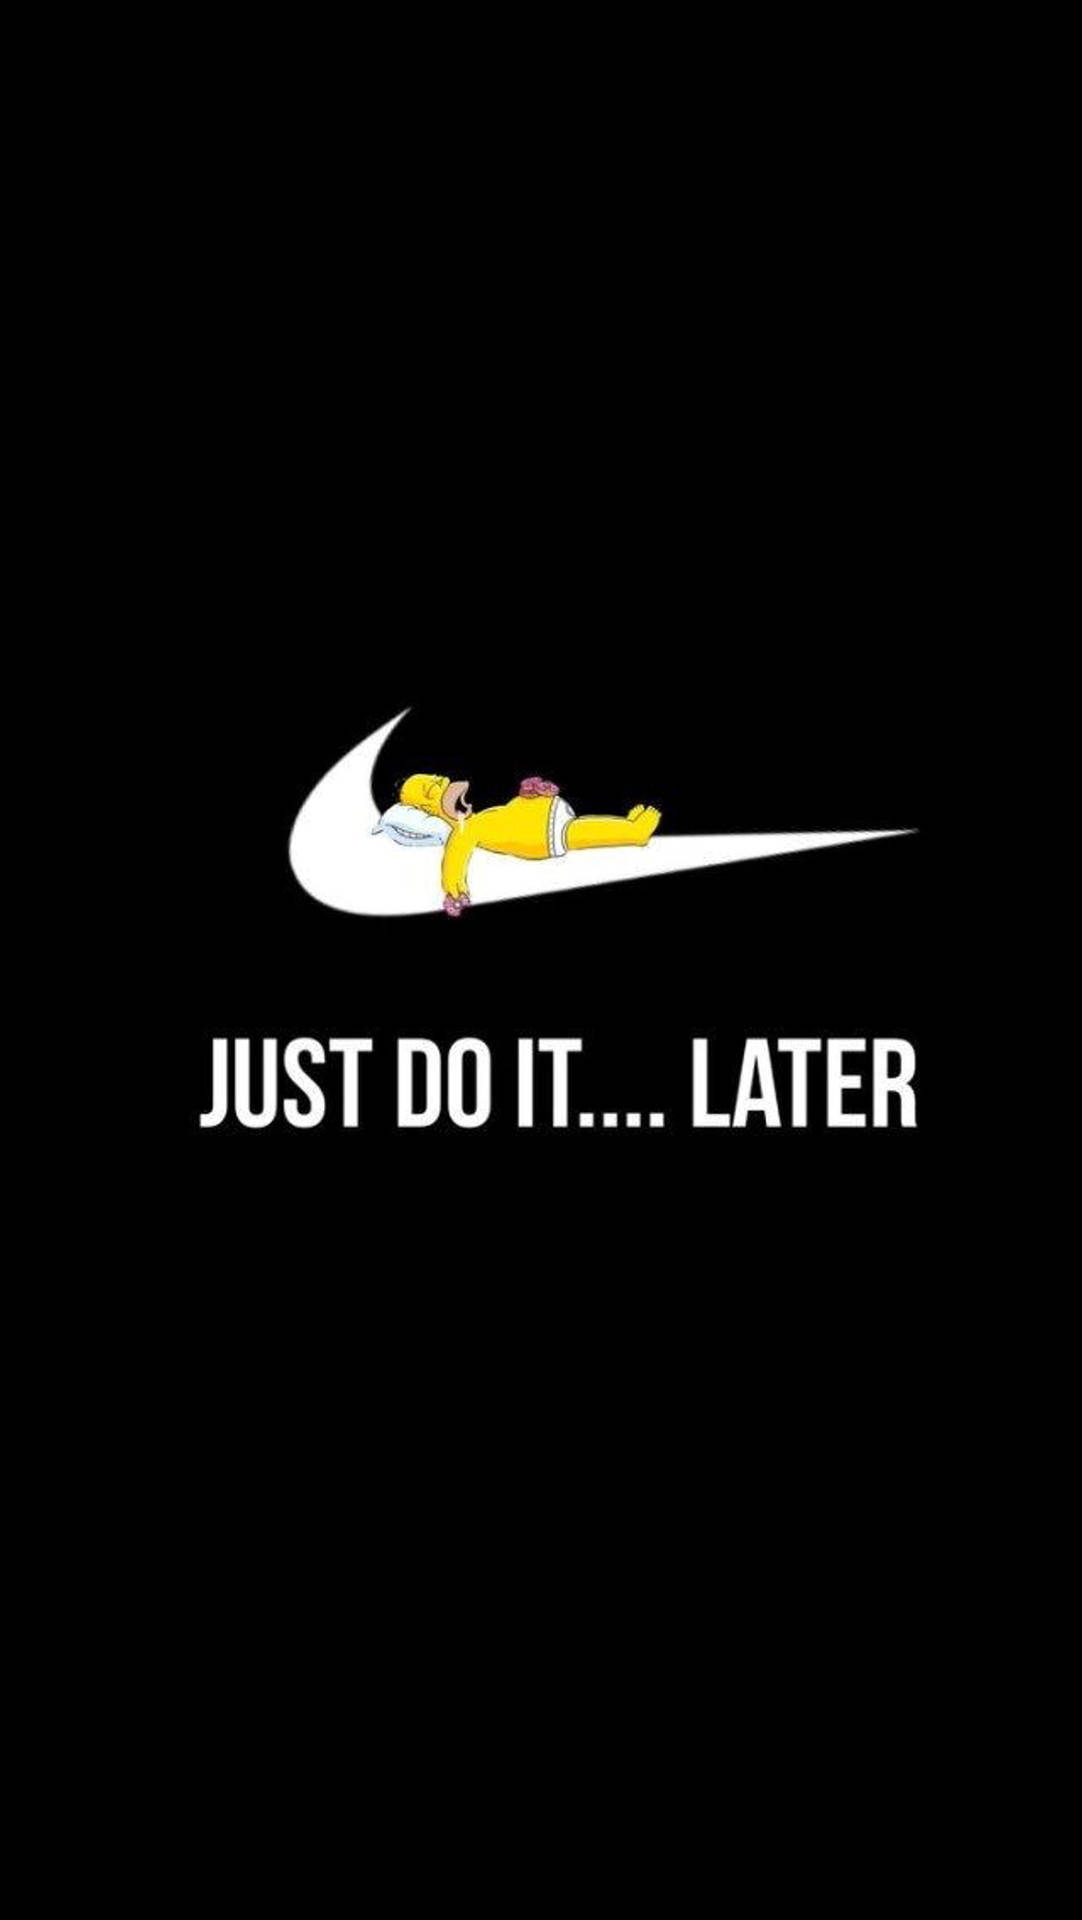 Nike Cartoon Sleeping Homer Logo Wallpaper